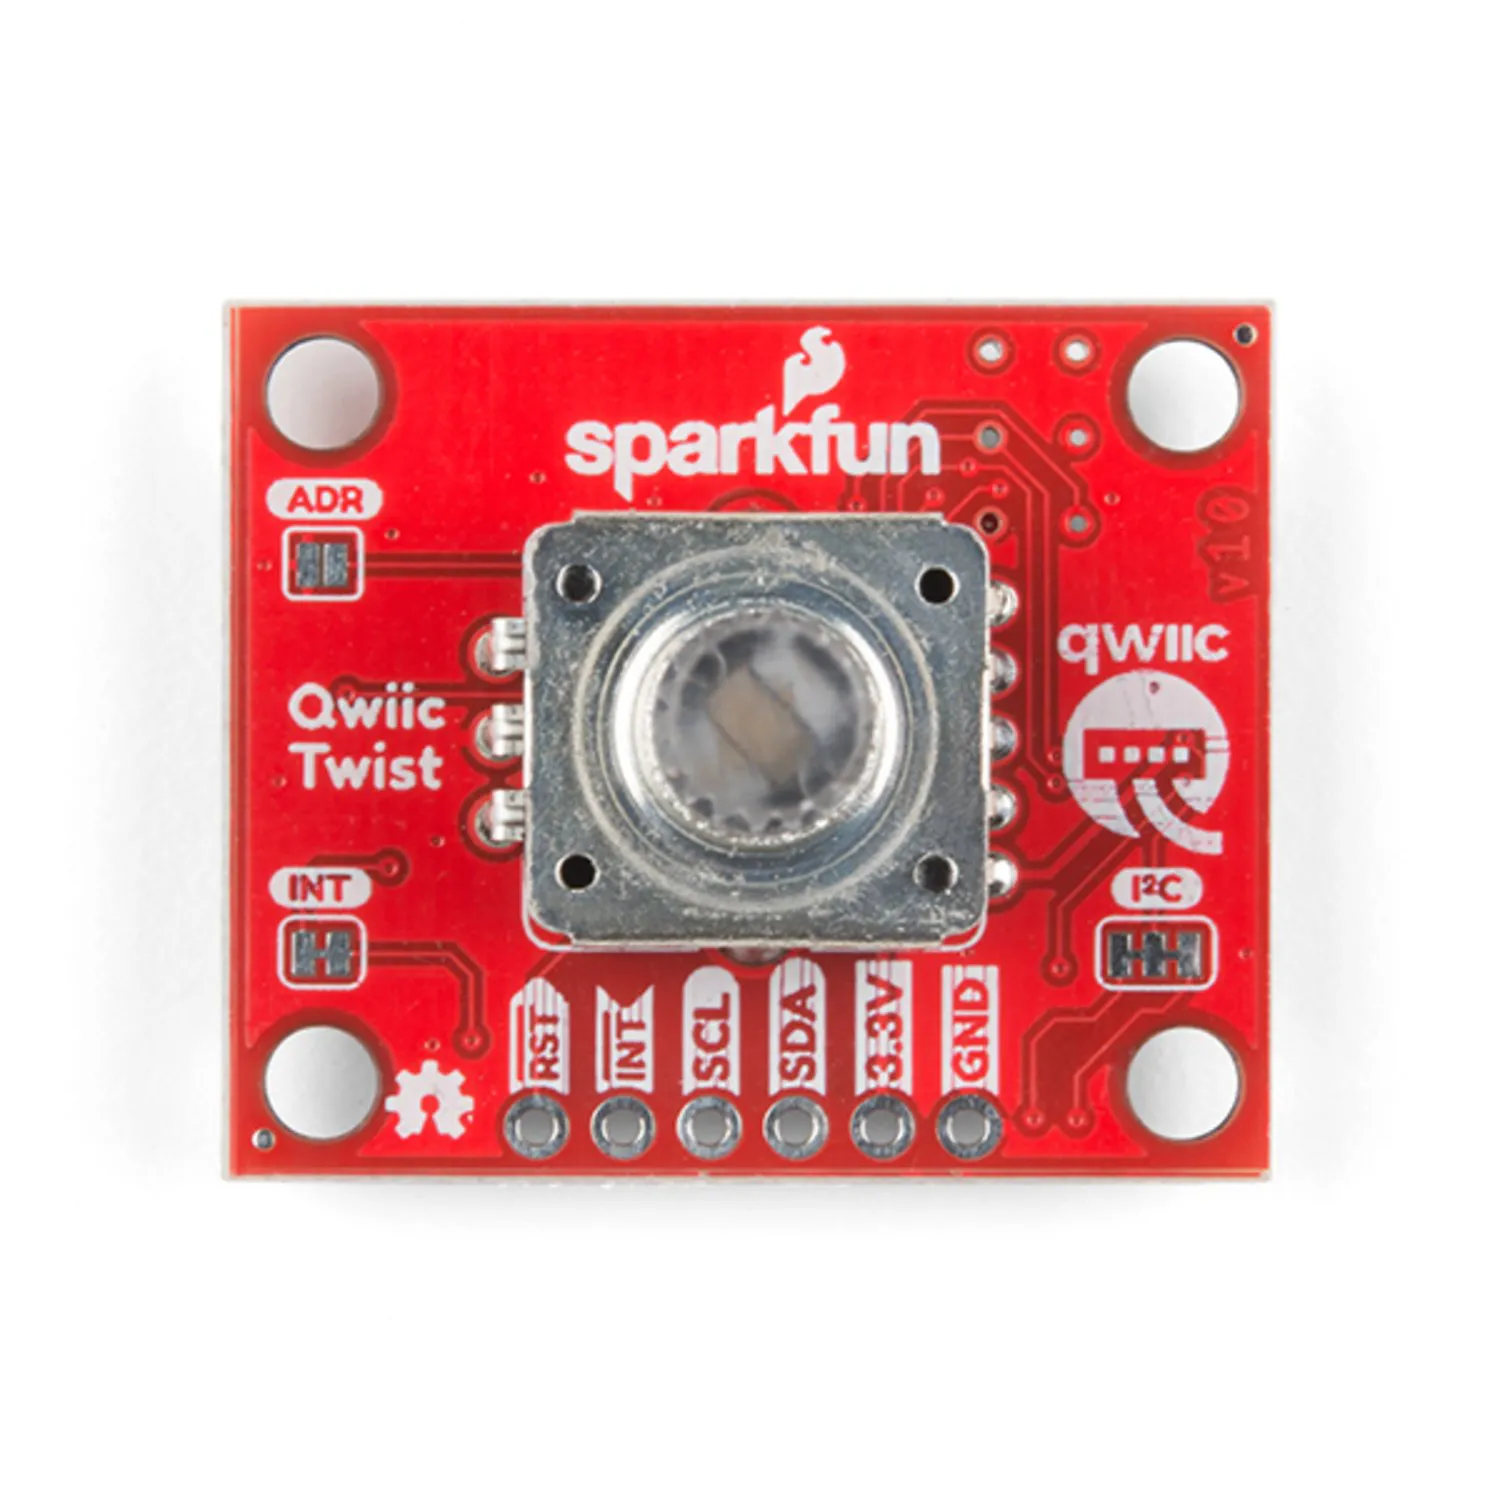 Photo of SparkFun Qwiic Twist - RGB Rotary Encoder Breakout